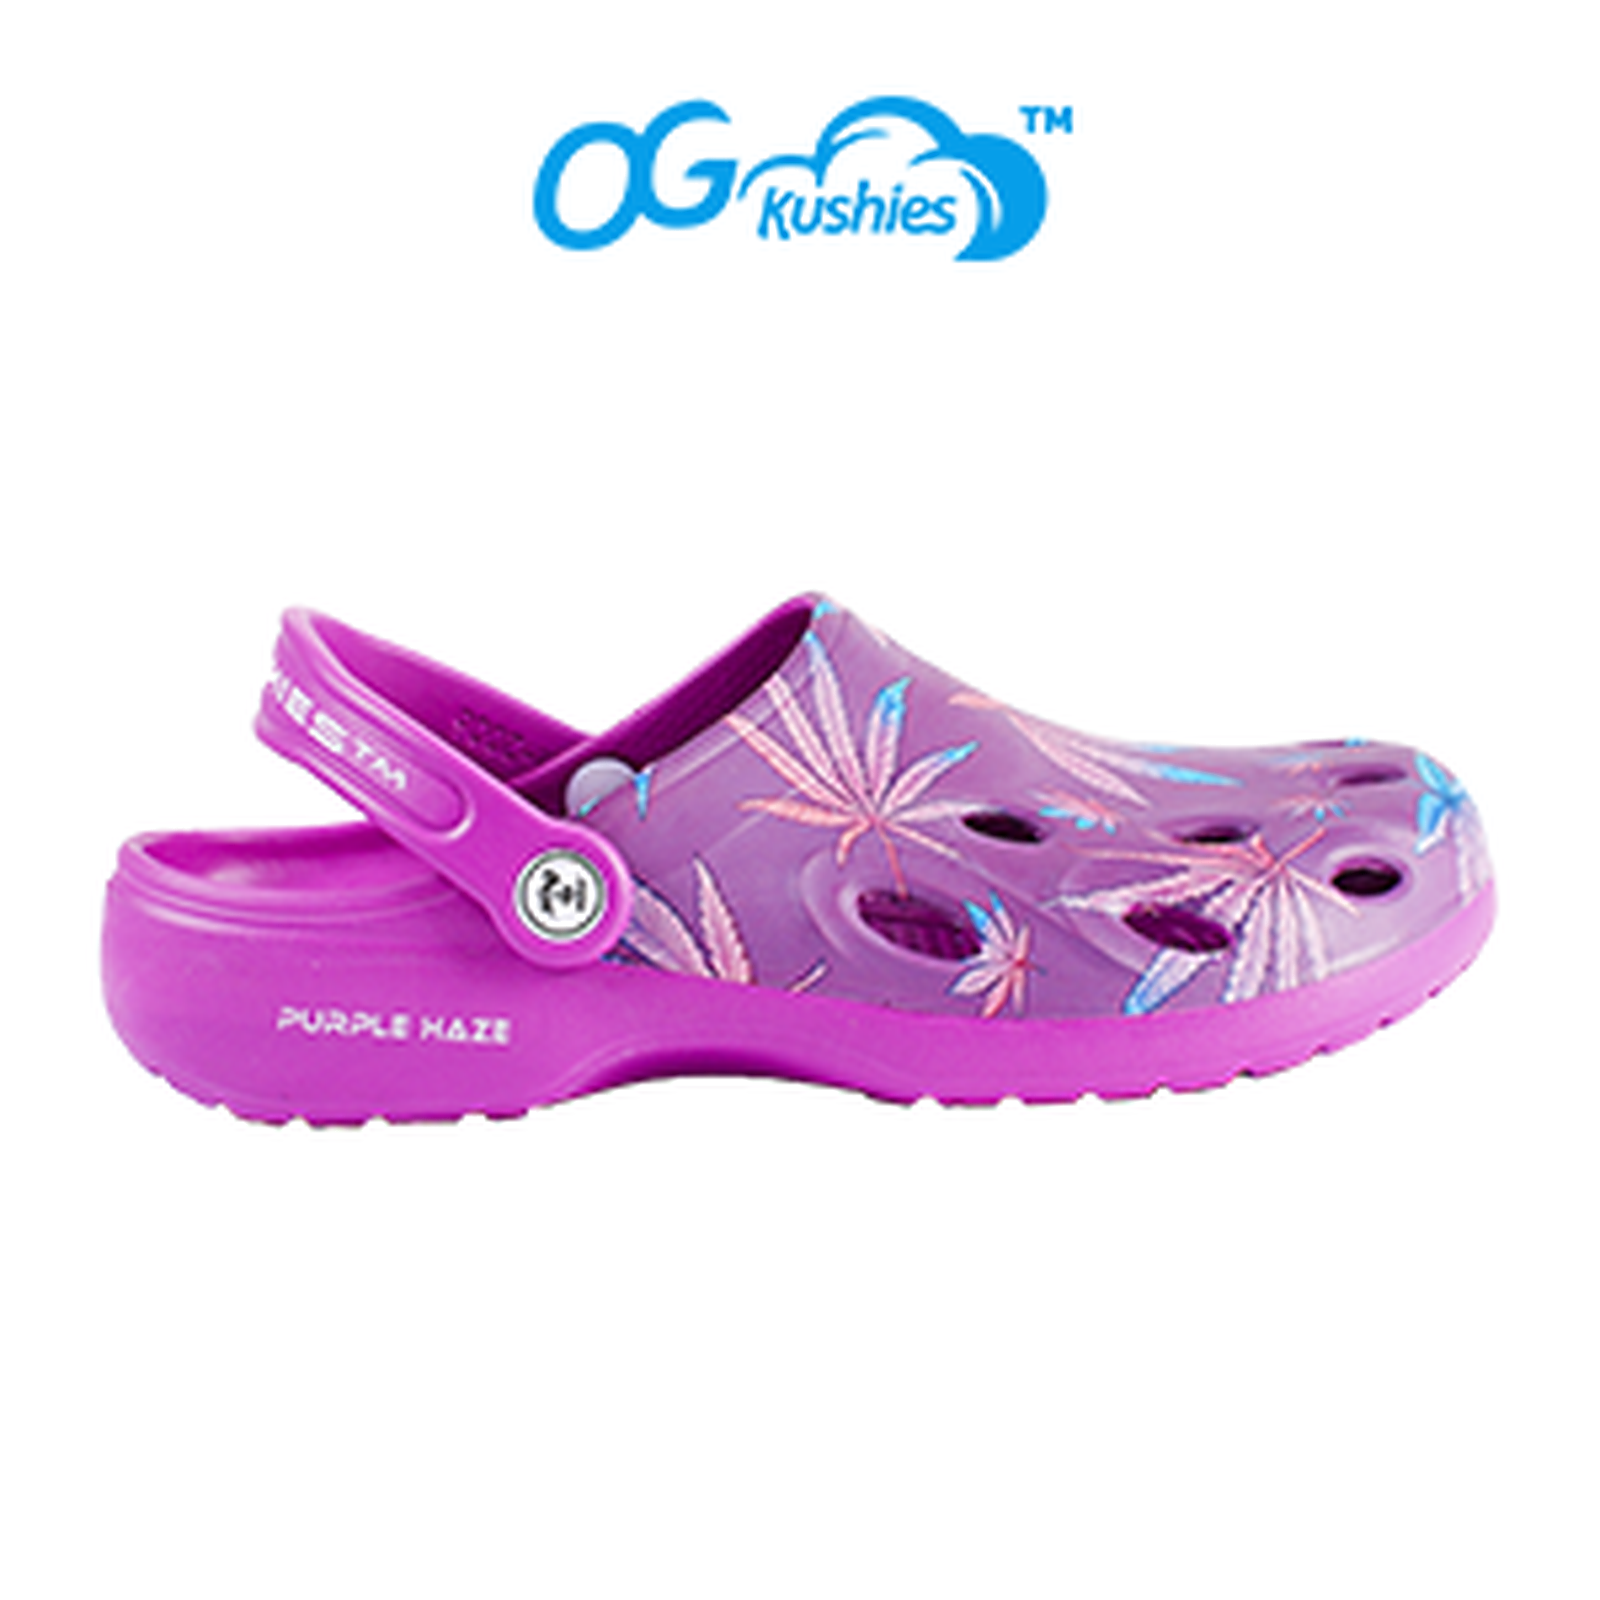 OG Kushies Unisex Clogs Shoes Slippers Sandals in Purple Haze